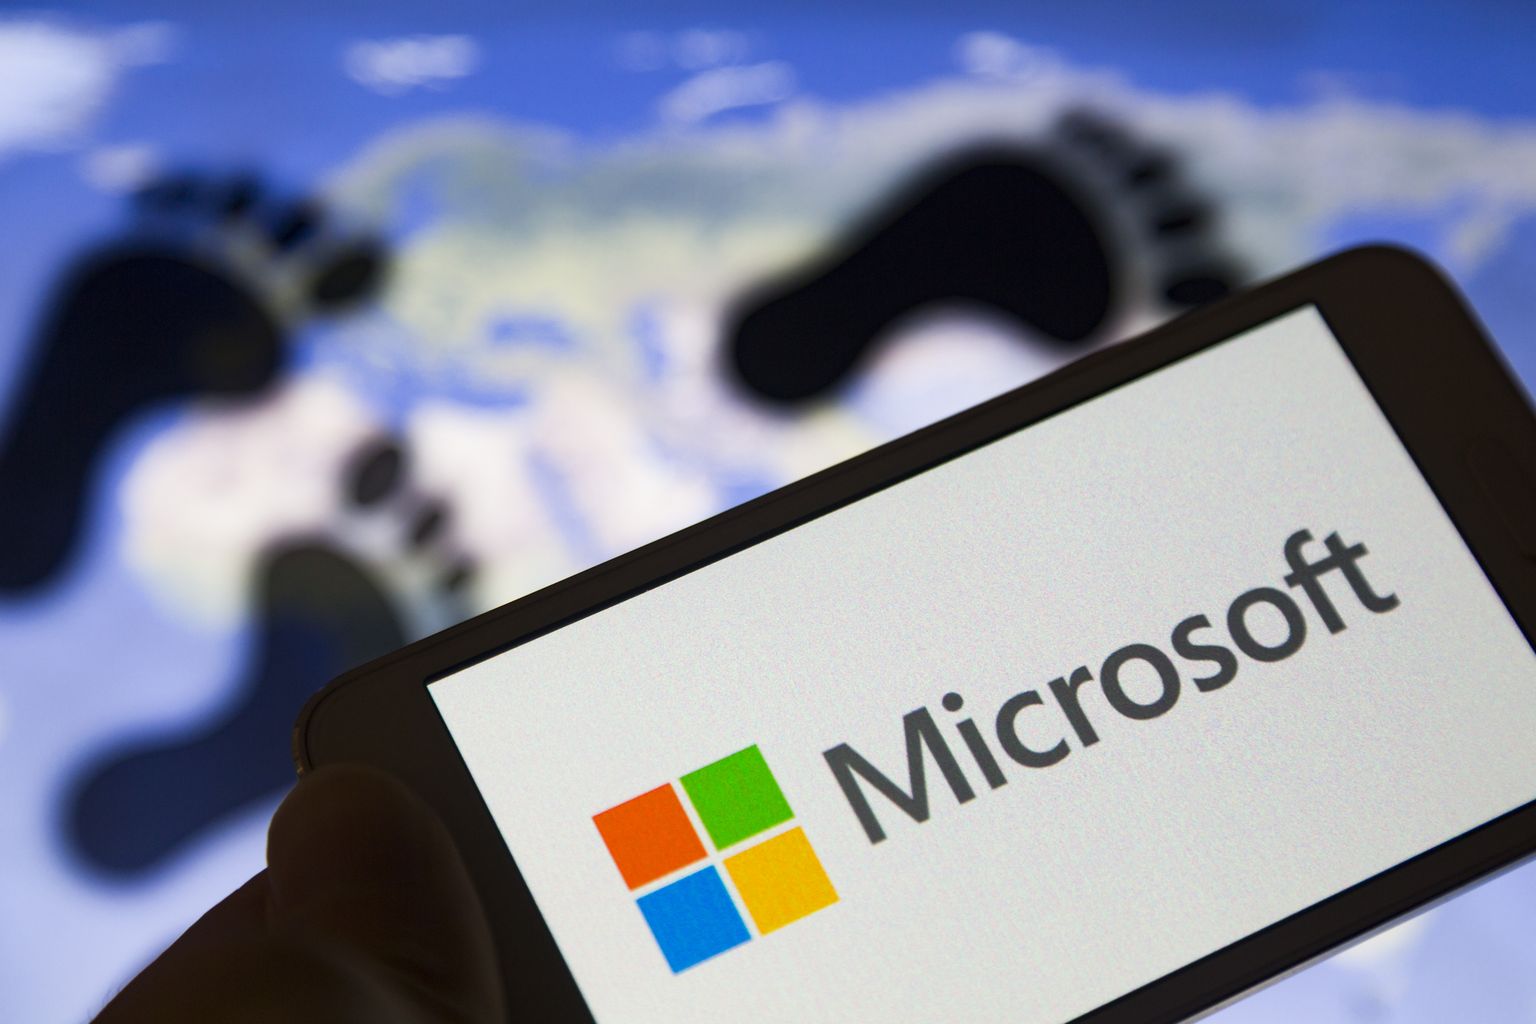 Microsofti logo